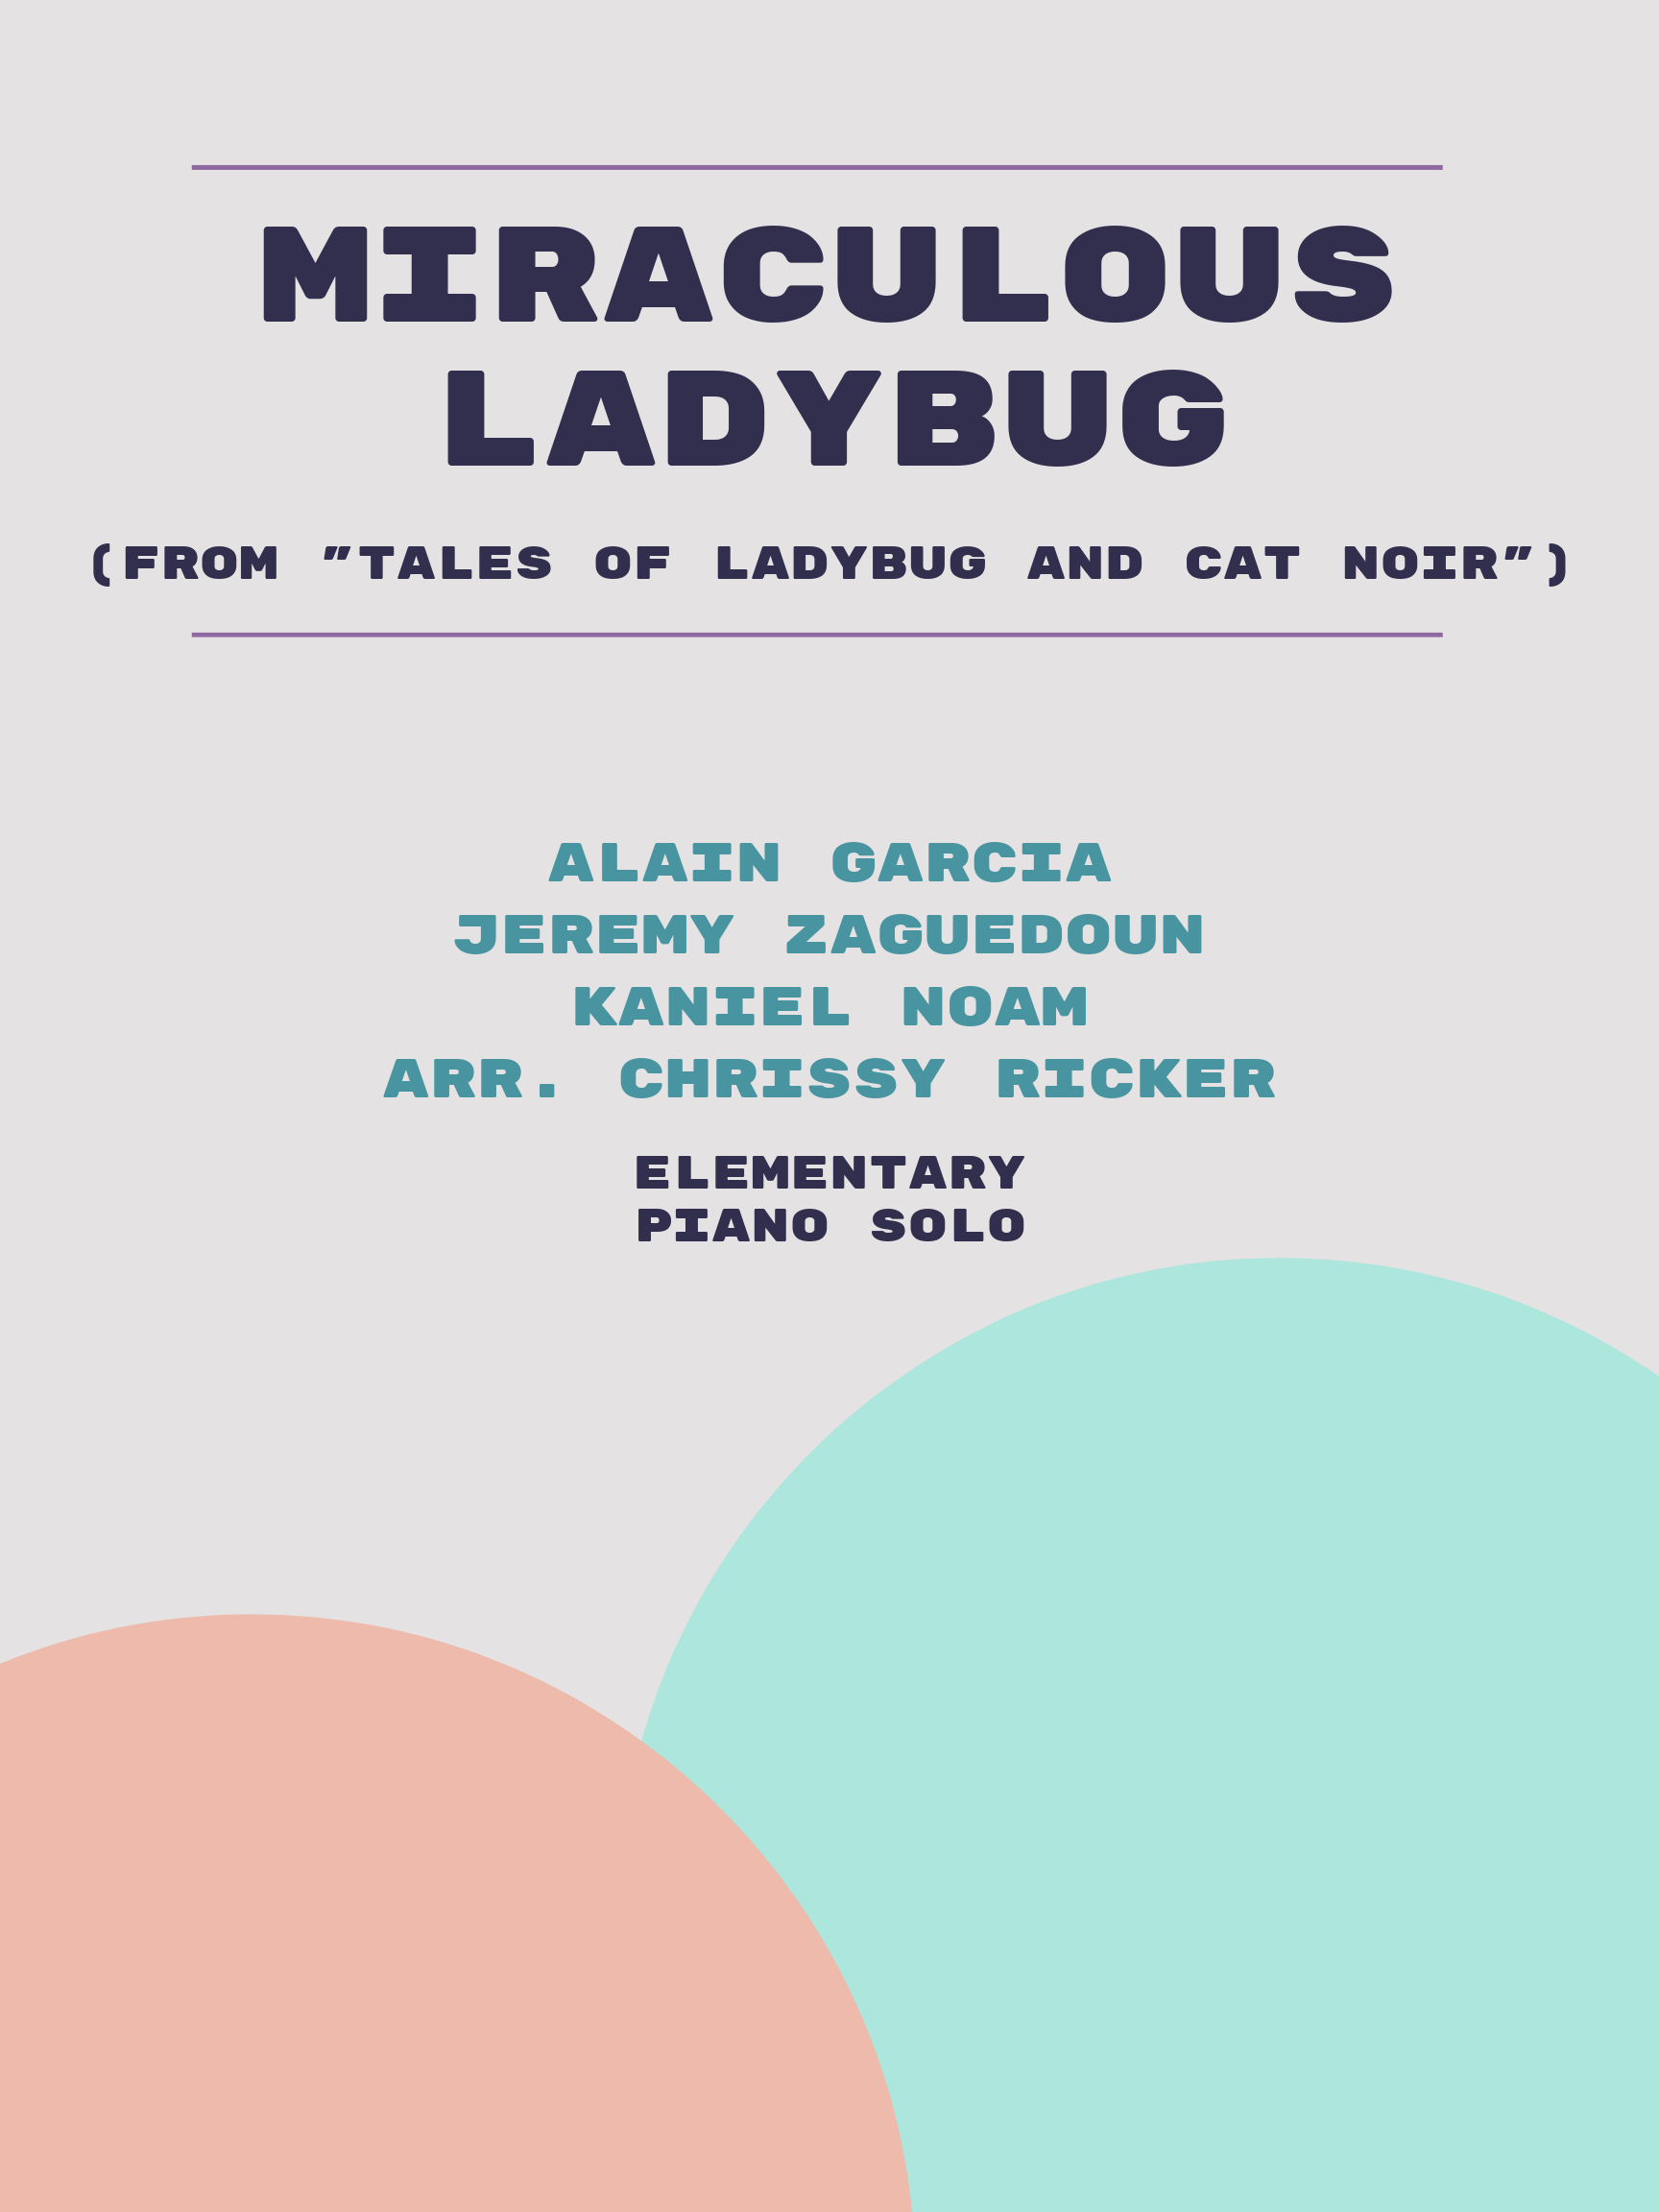 Miraculous Ladybug by Alain Garcia, Jeremy Zaguedoun, Kaniel Noam